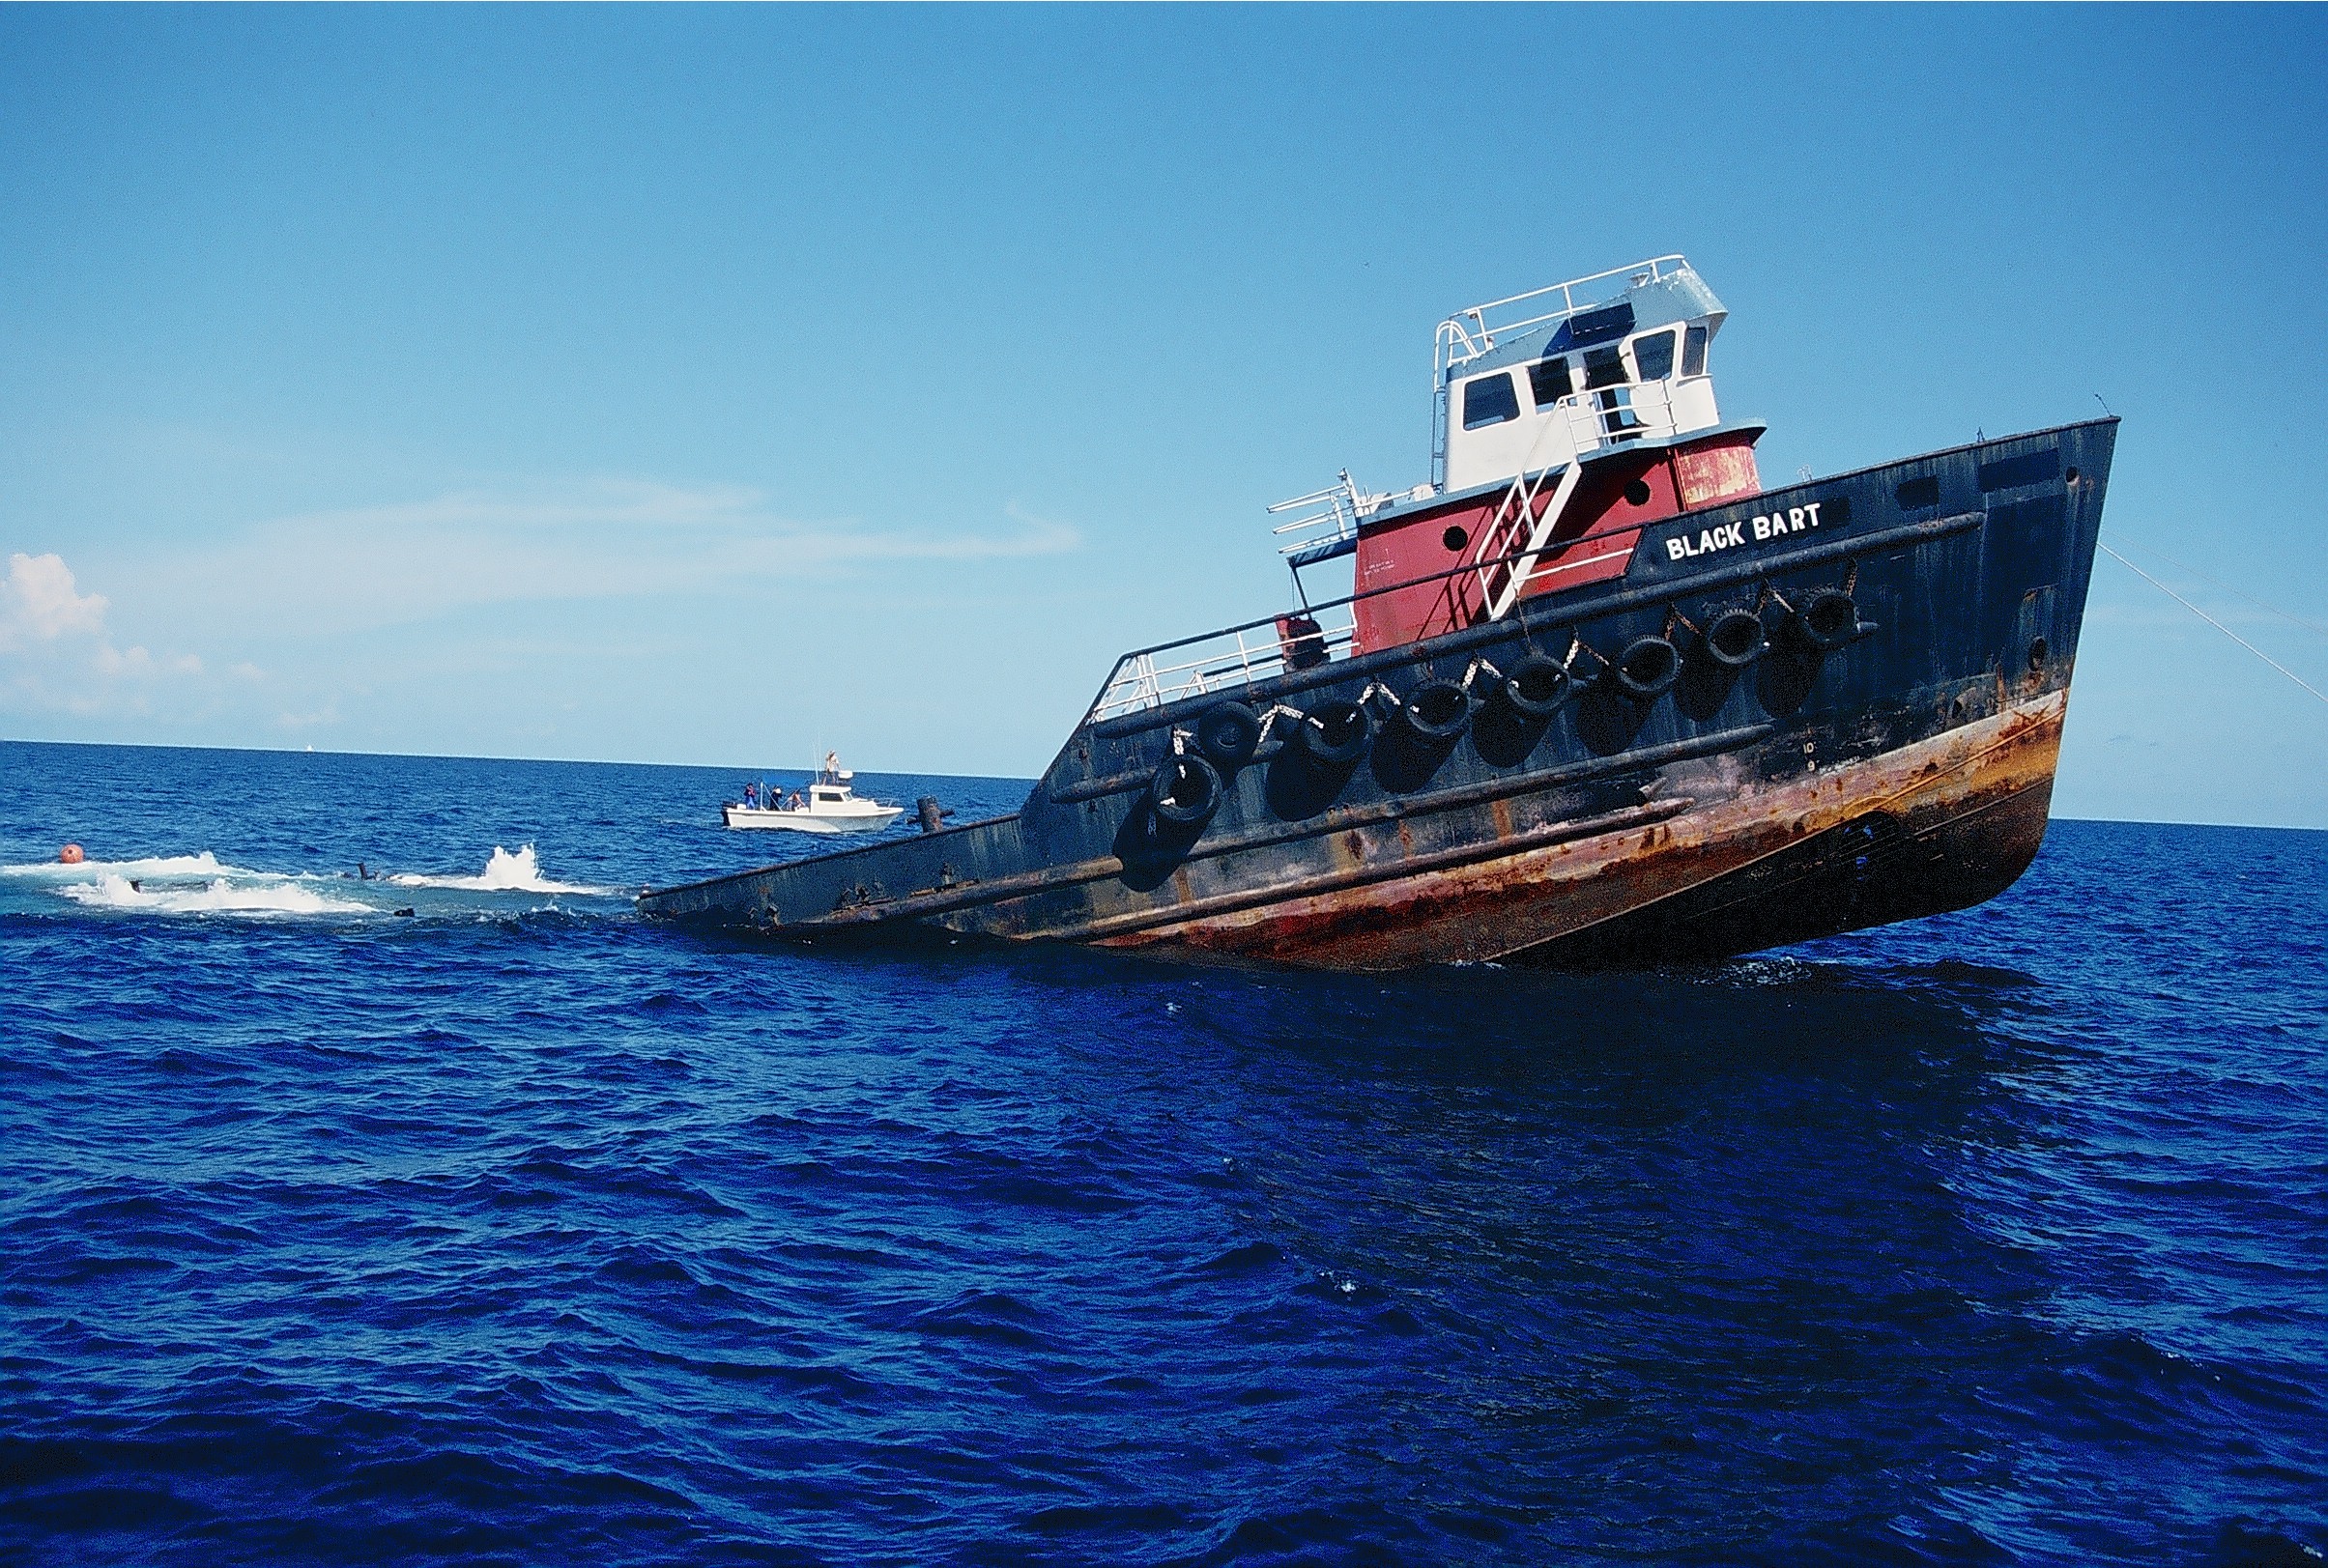  The Black Bart Shipwreck Panama City Beach